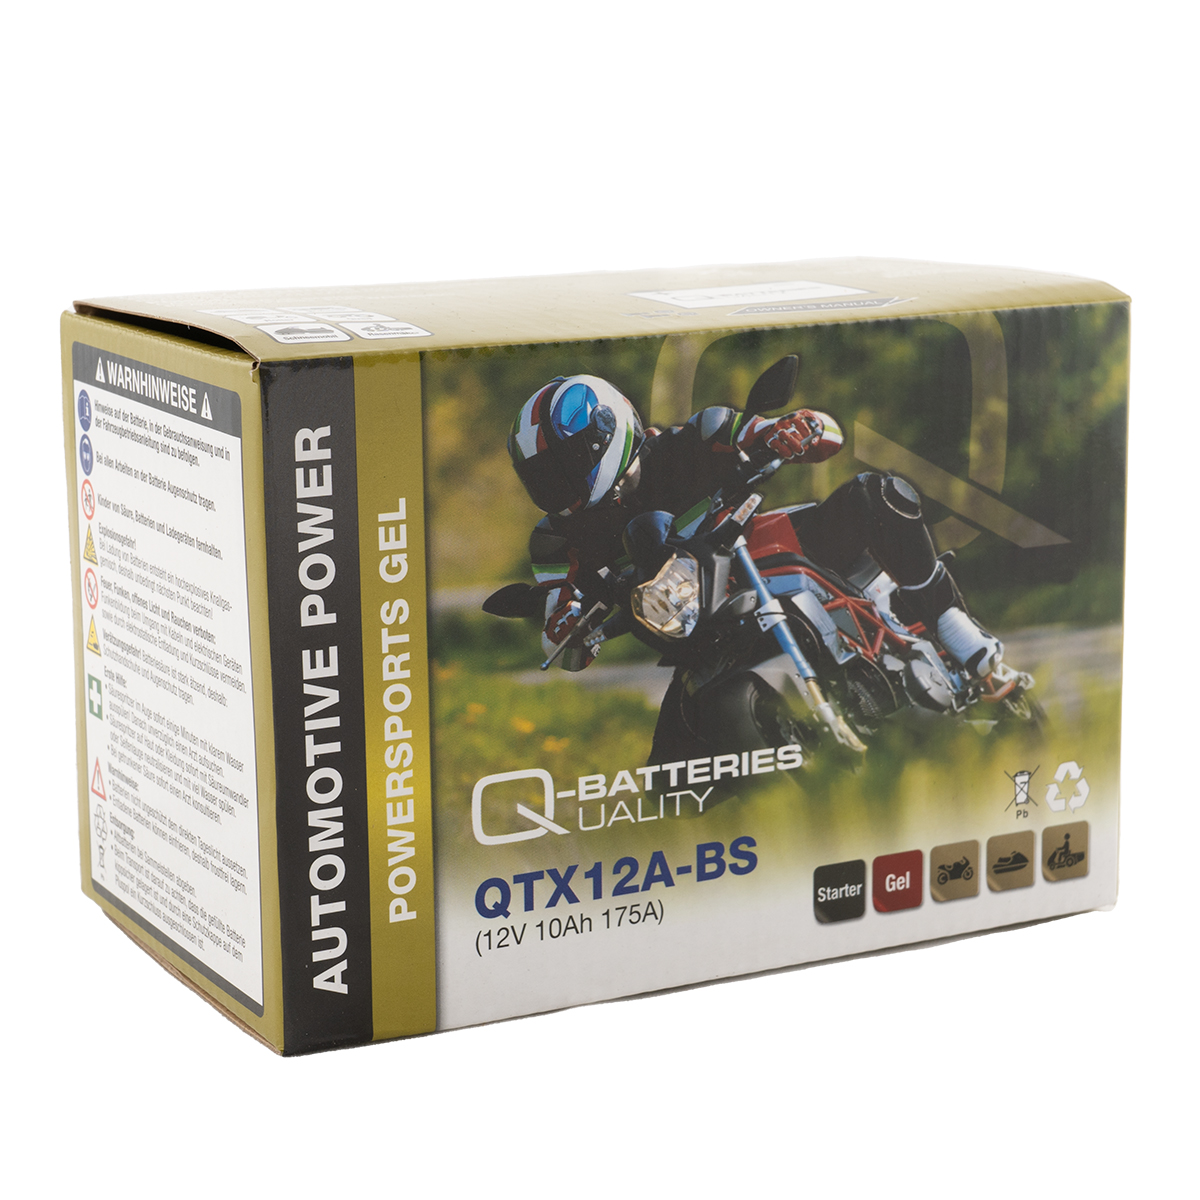 Q-Batteries QTX12A-BS Gel Motorradbatterie 12V 10Ah 175A